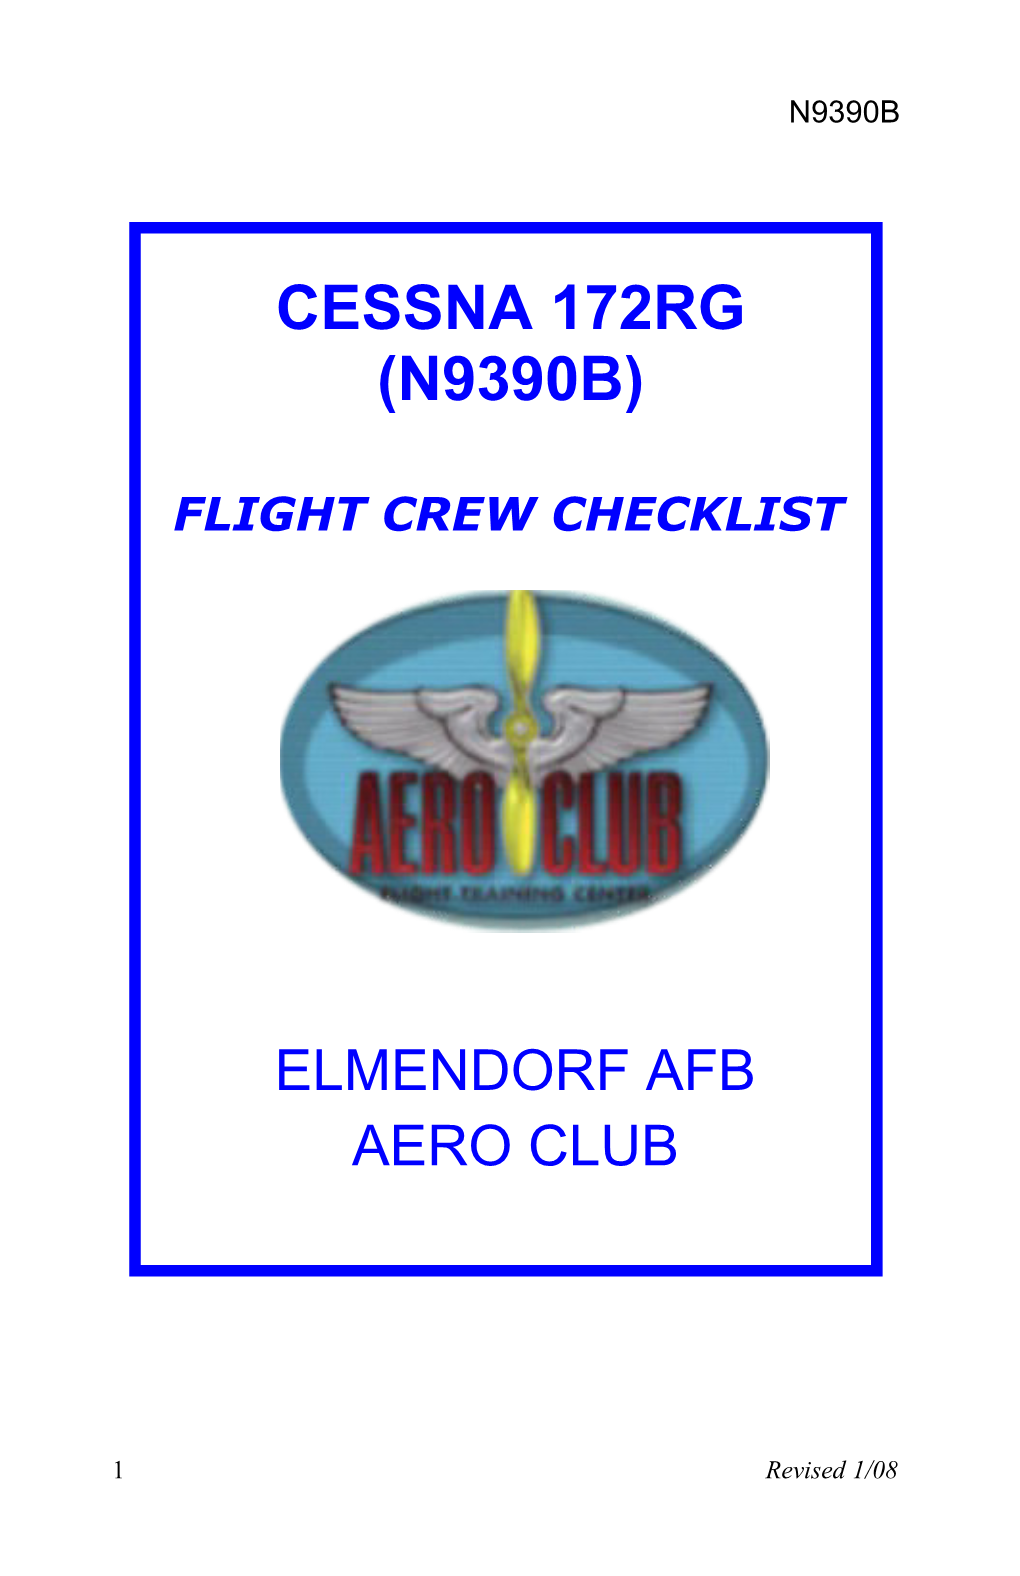 Flight Crew Checklist